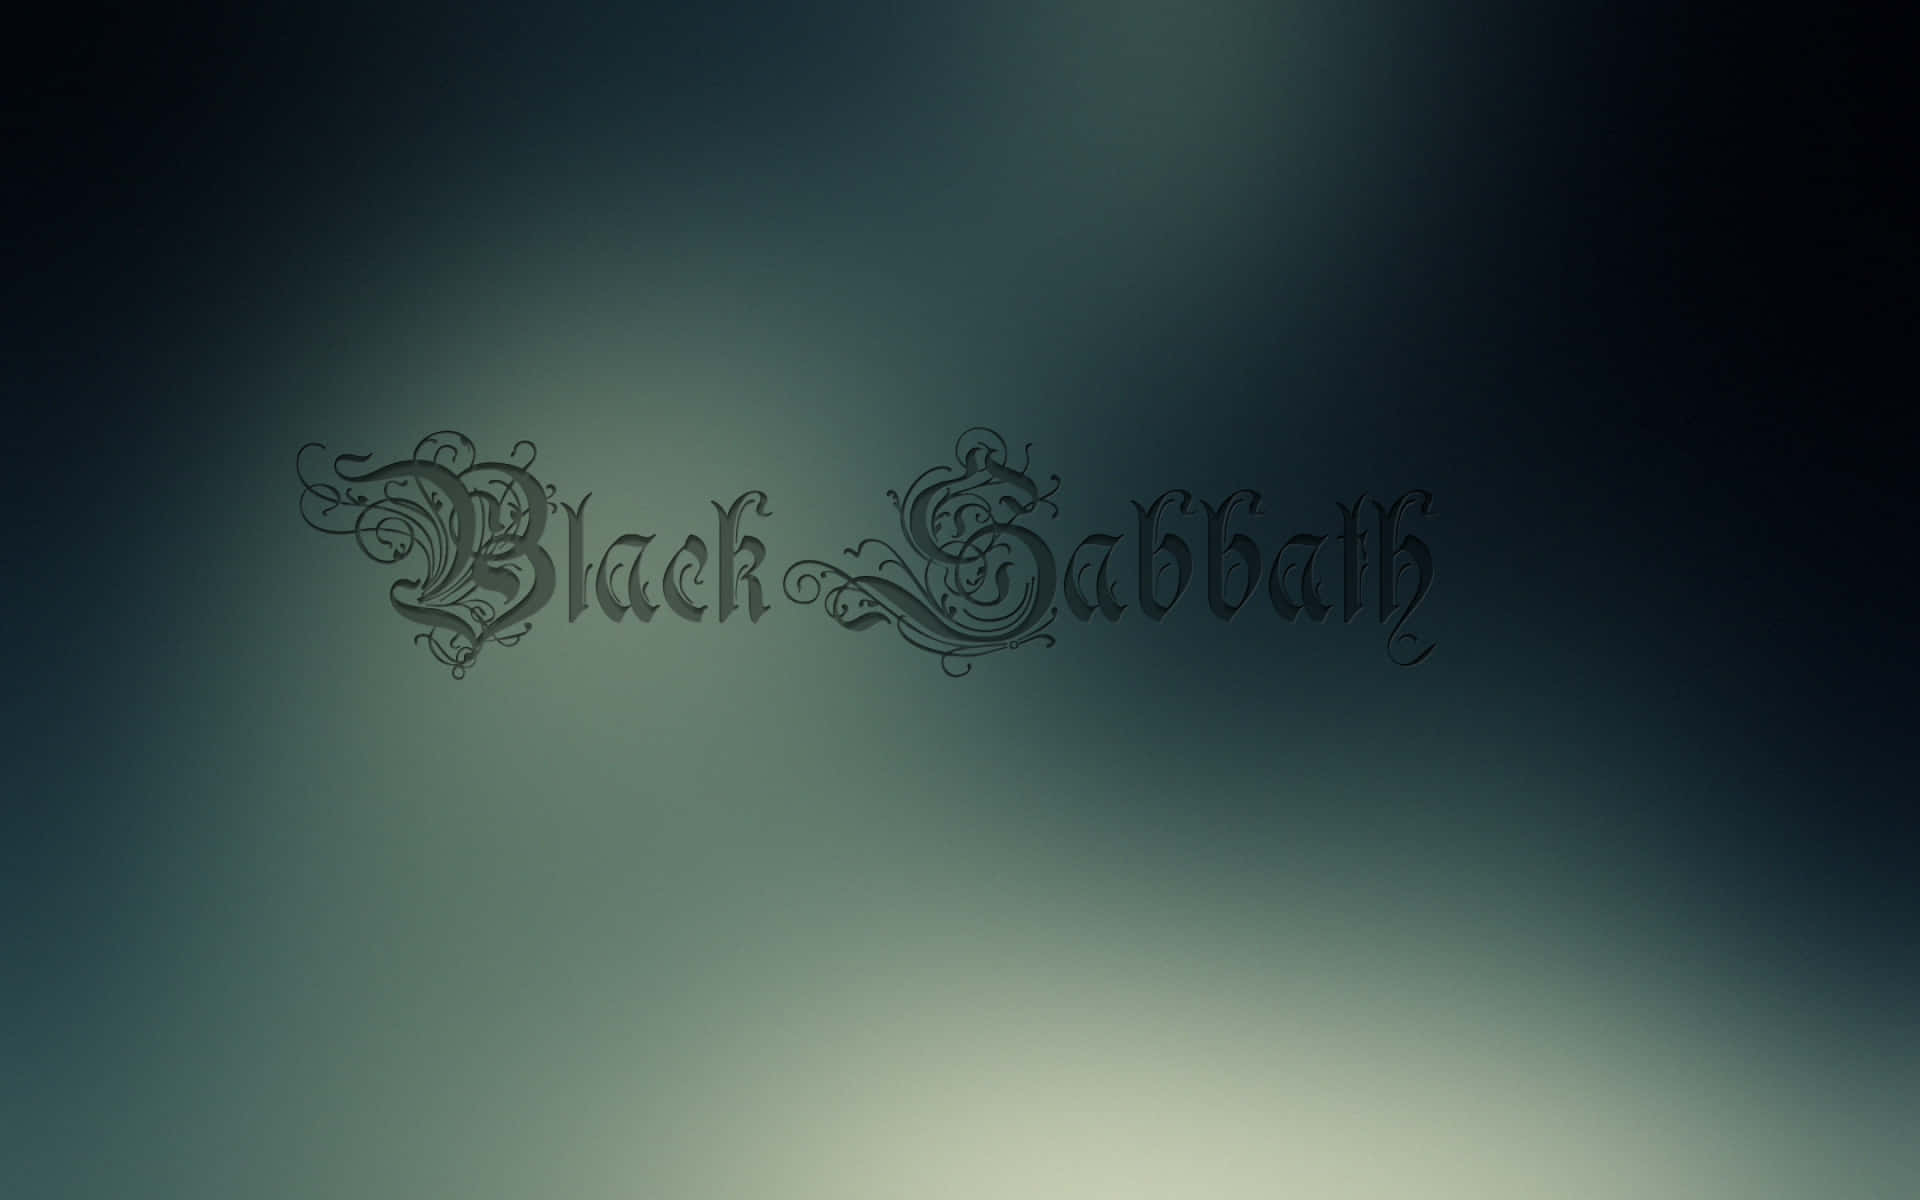 Black Sabbath Logo Background Wallpaper